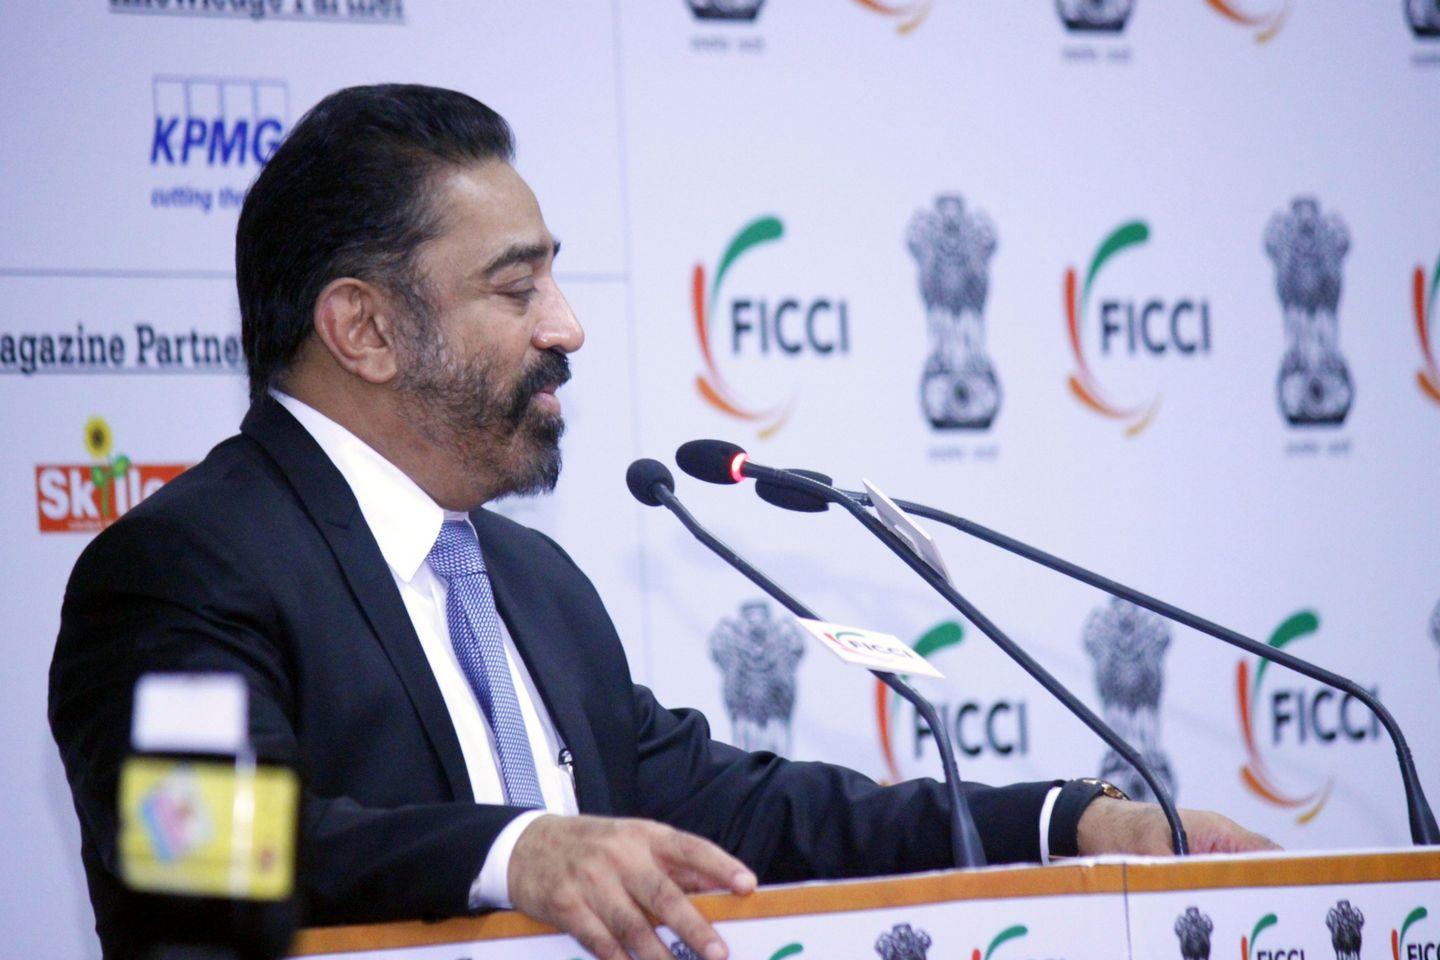 Kamal Haasan at Global Skills Summit 2015